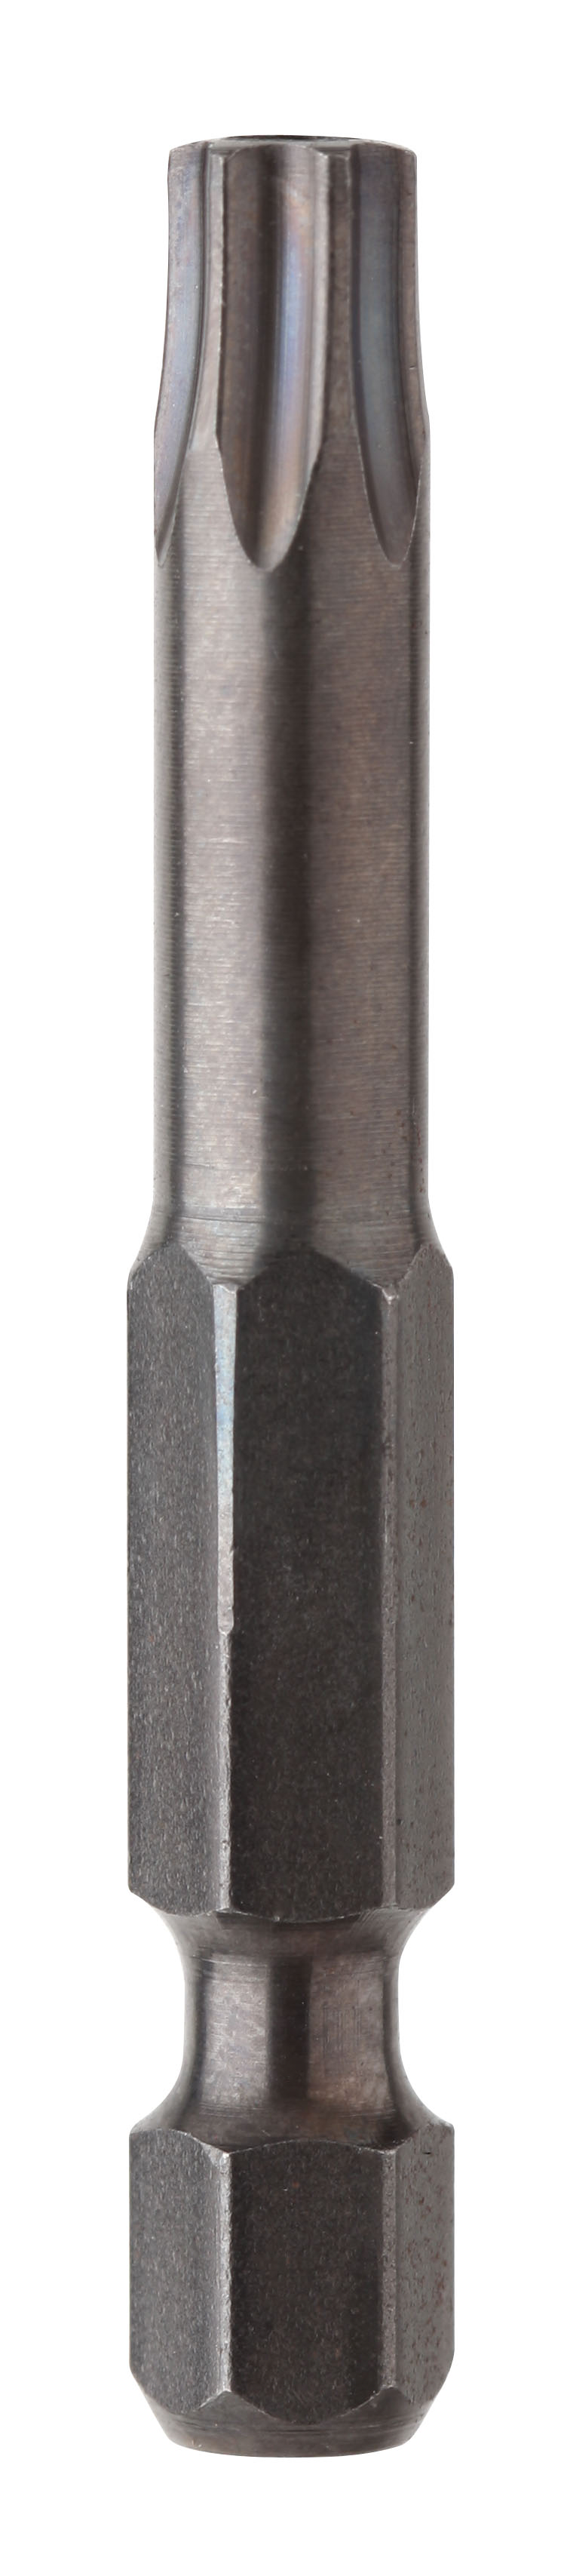 Screwdriving Quality bit Torx® Tamper industry bits length 50 mm with reduced shank - U624TT30 50.jpg